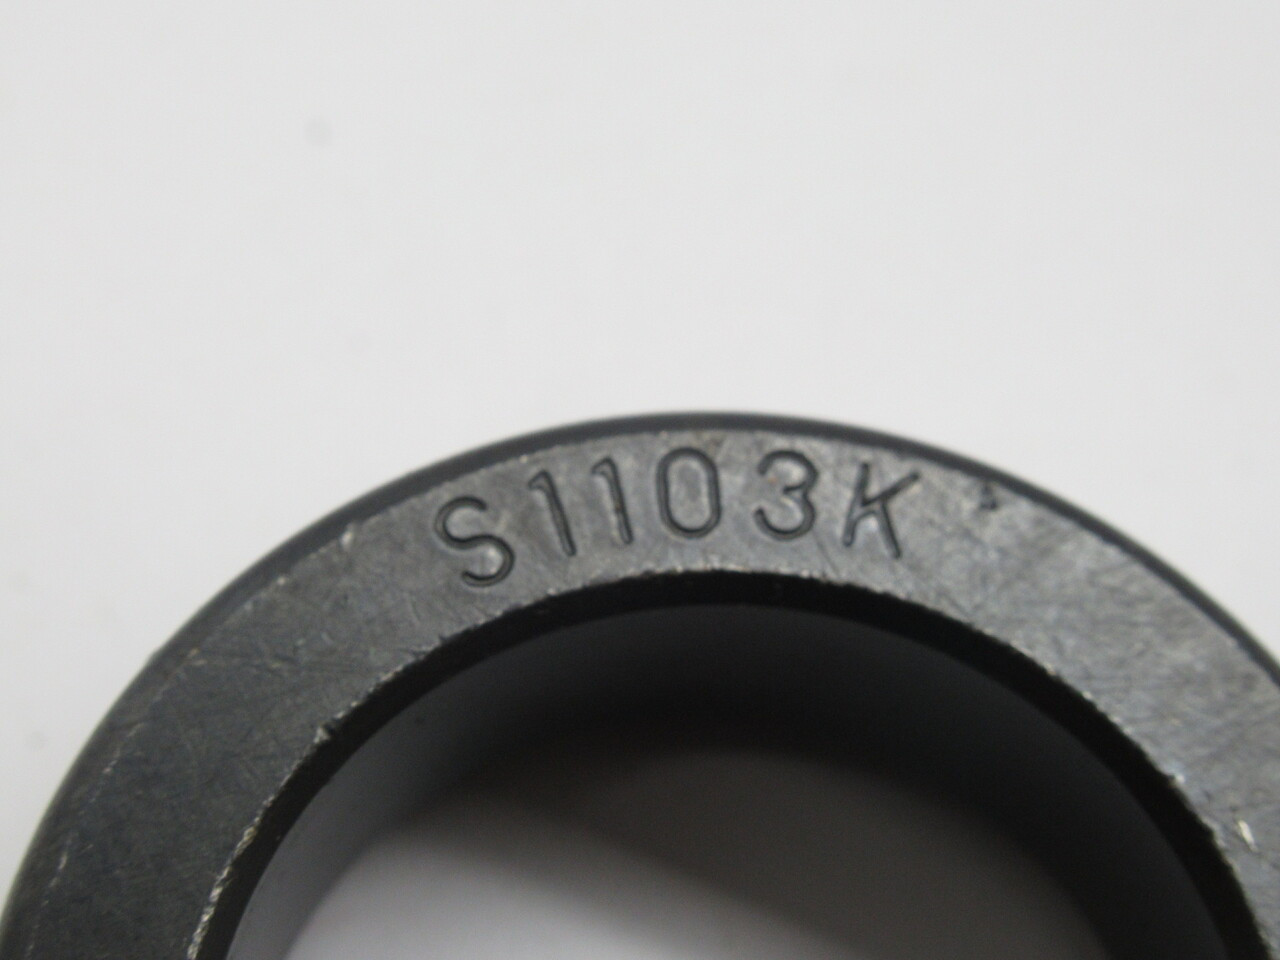 Fafnir S1103K Locking Collar 1-3/16" Bore 1-3/4" OD USED